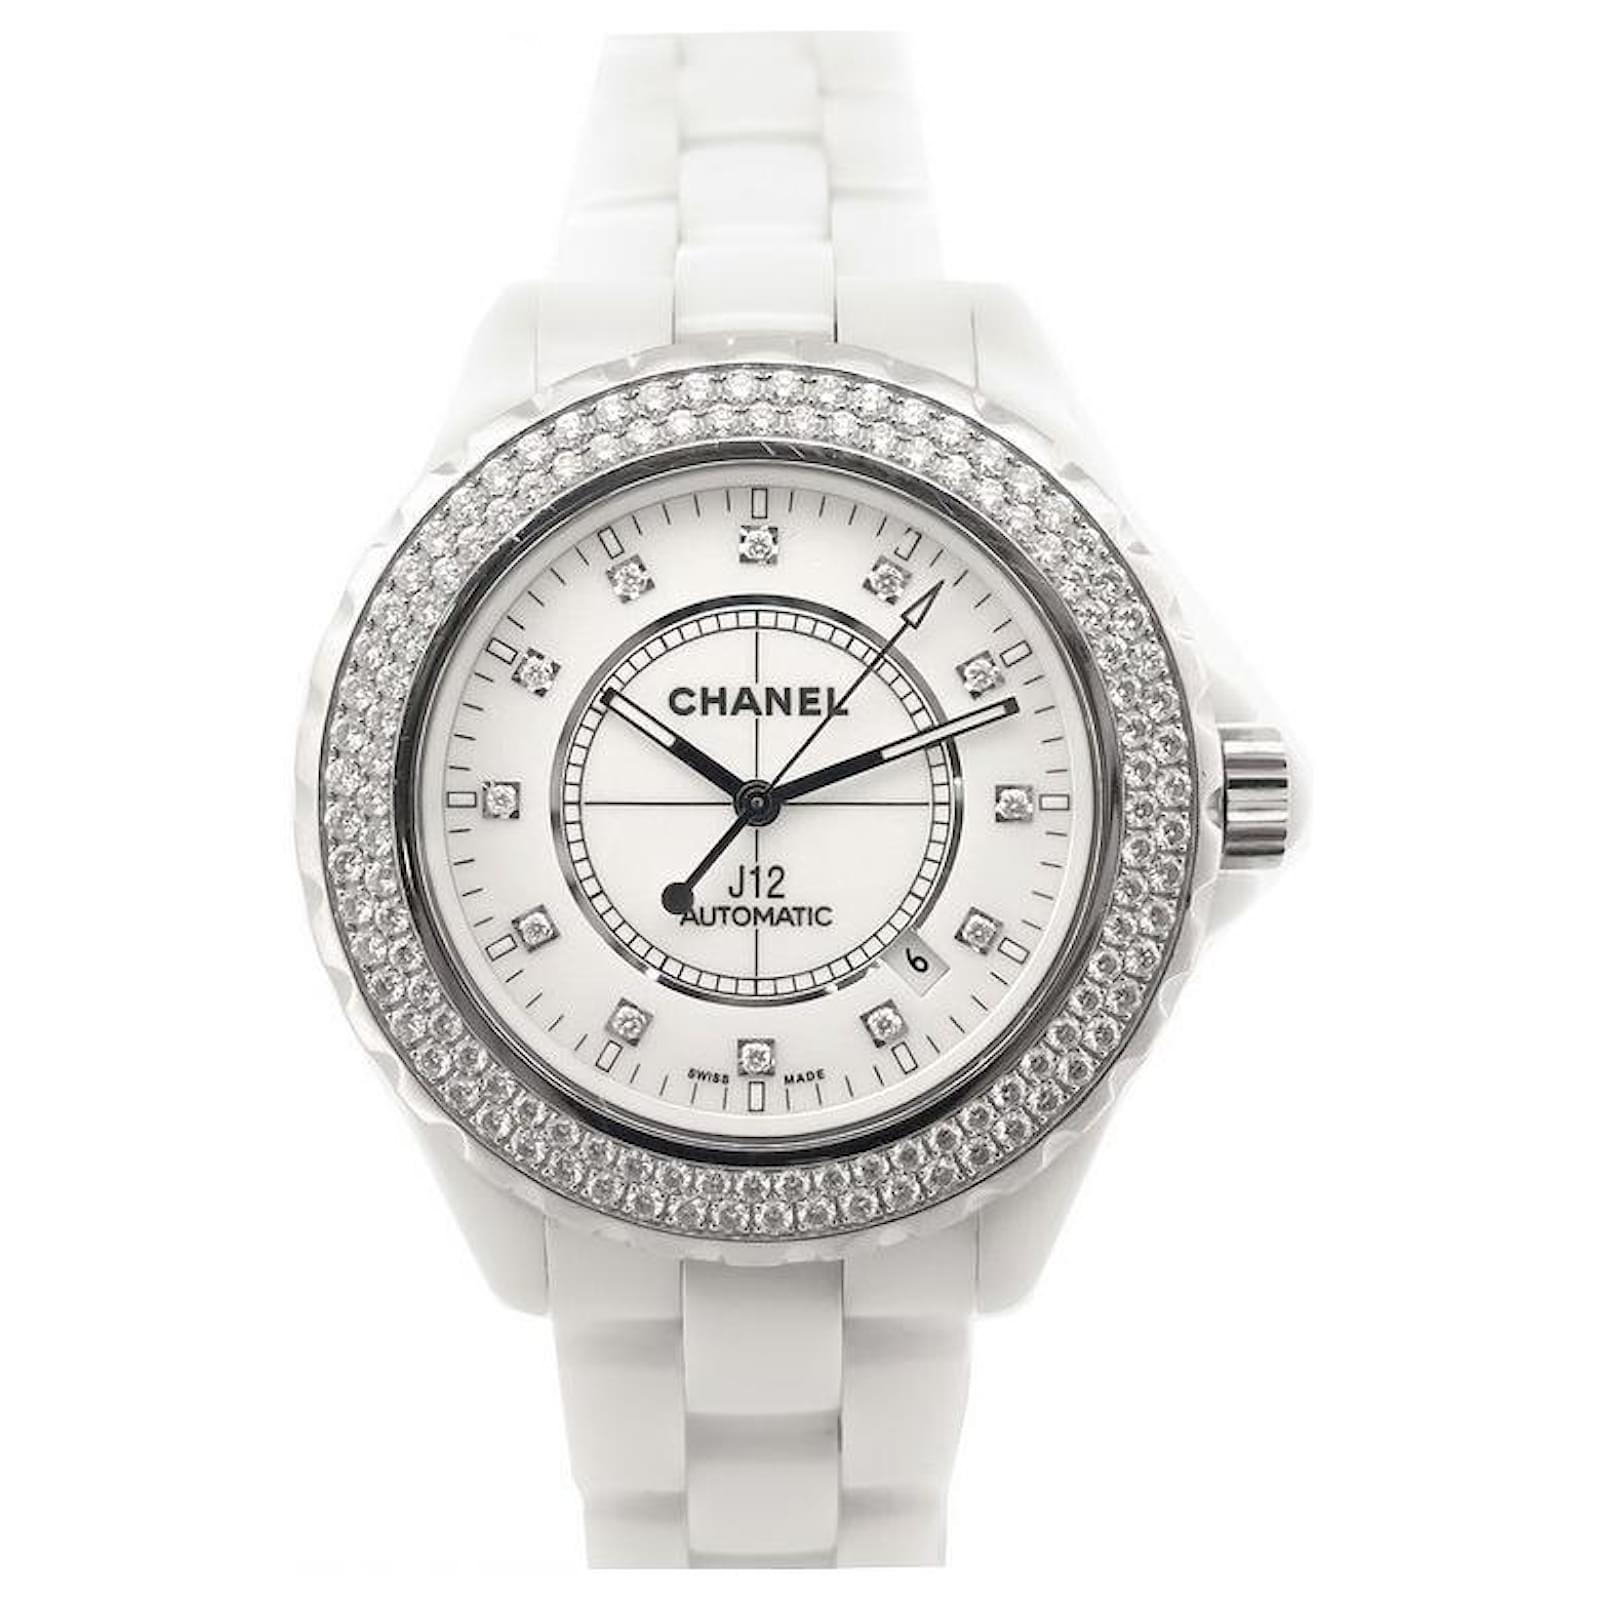 Chanel J watch12 H2013 WHITE CERAMIC & DIAMONDS AUTOMATIC WATCH